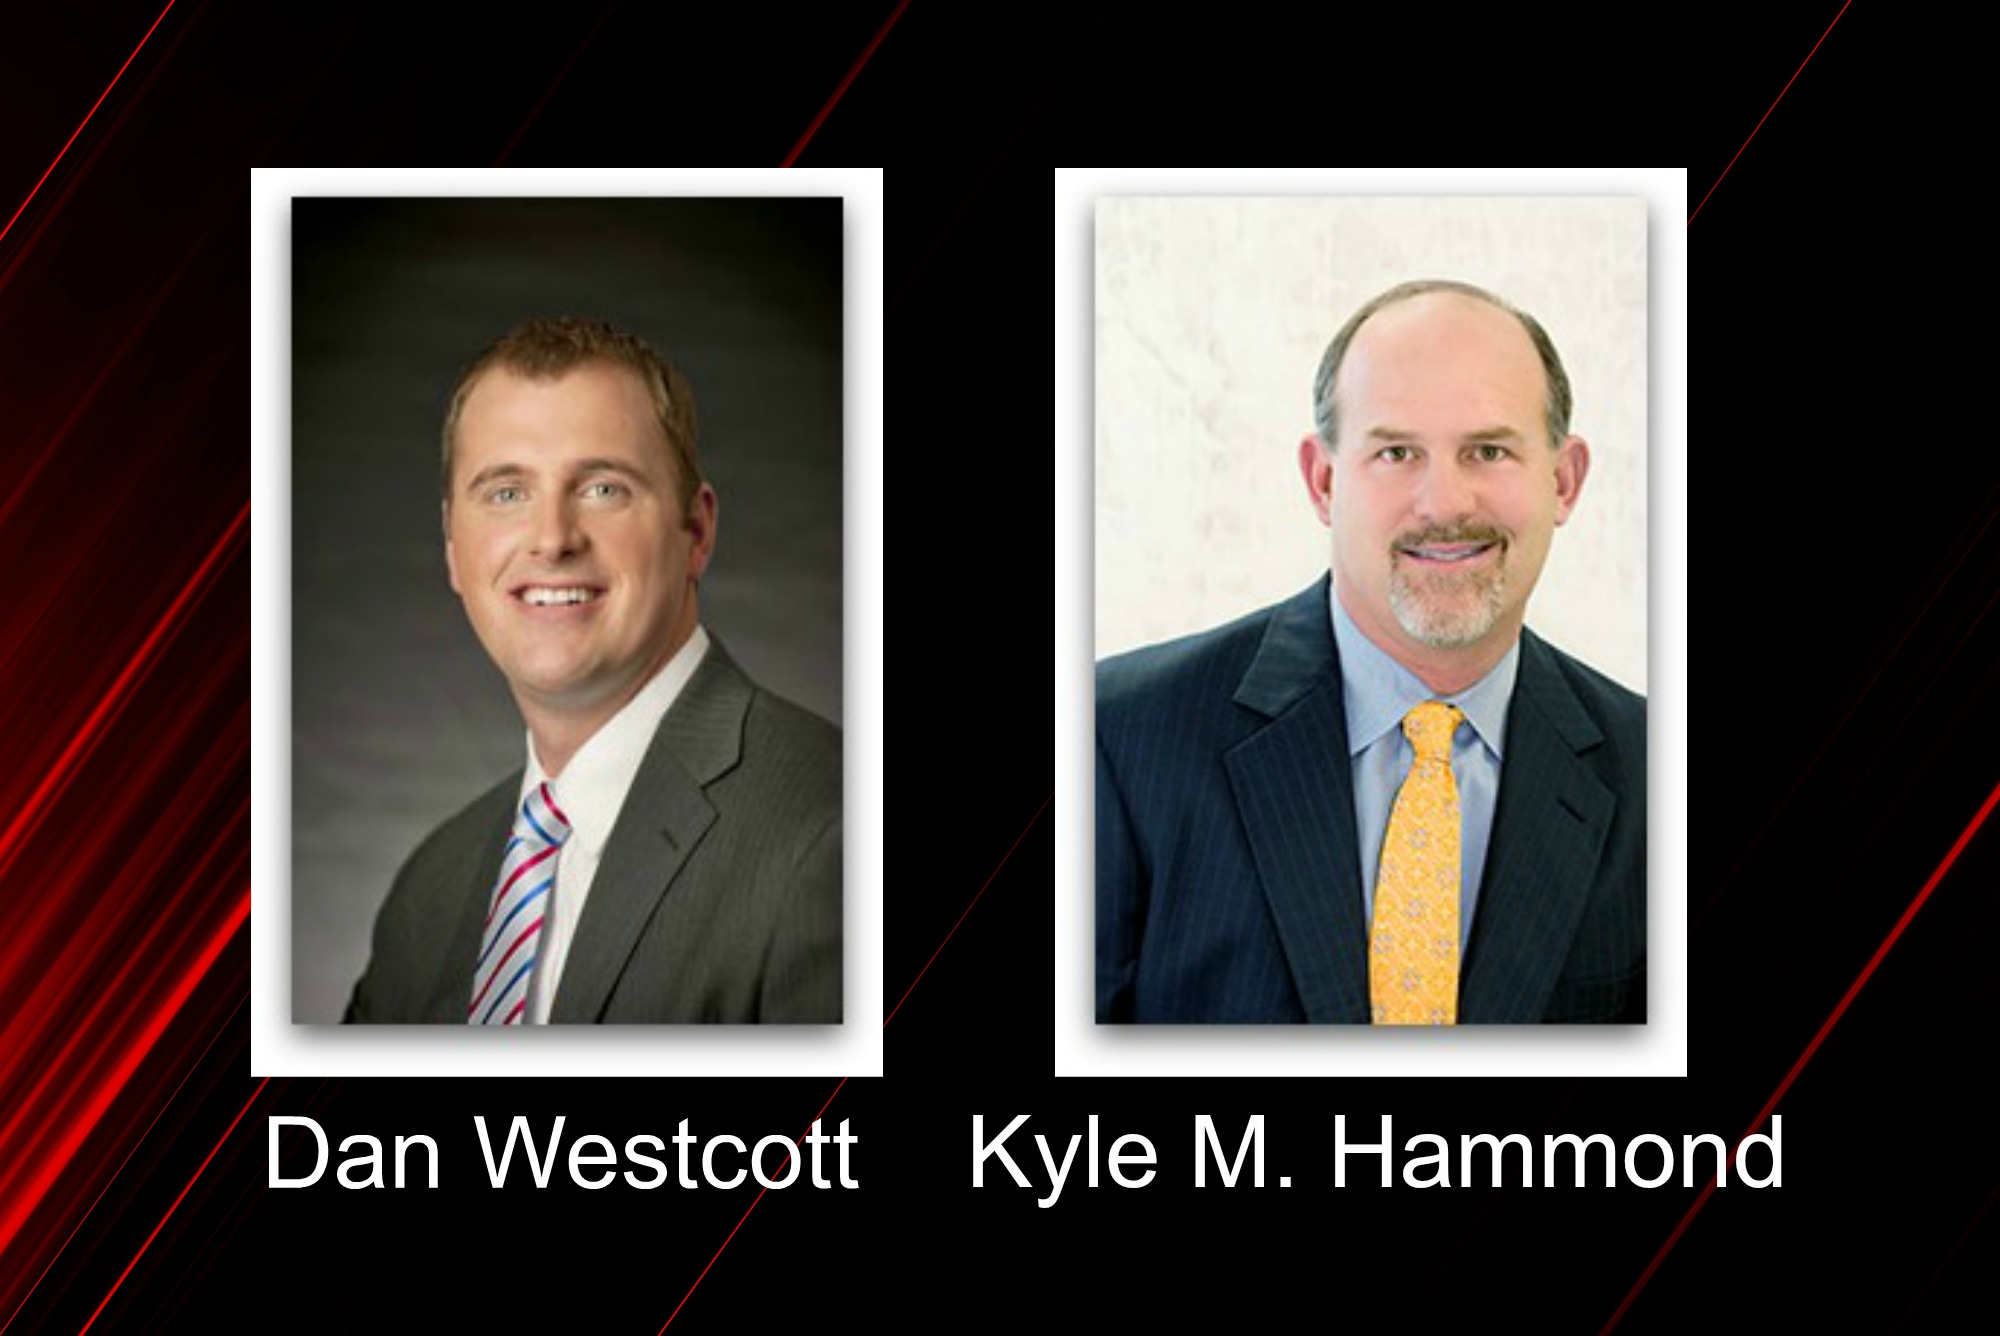 Dan Westcott and Kyle M. Hammond (Source: Legacy Reserves Inc.)